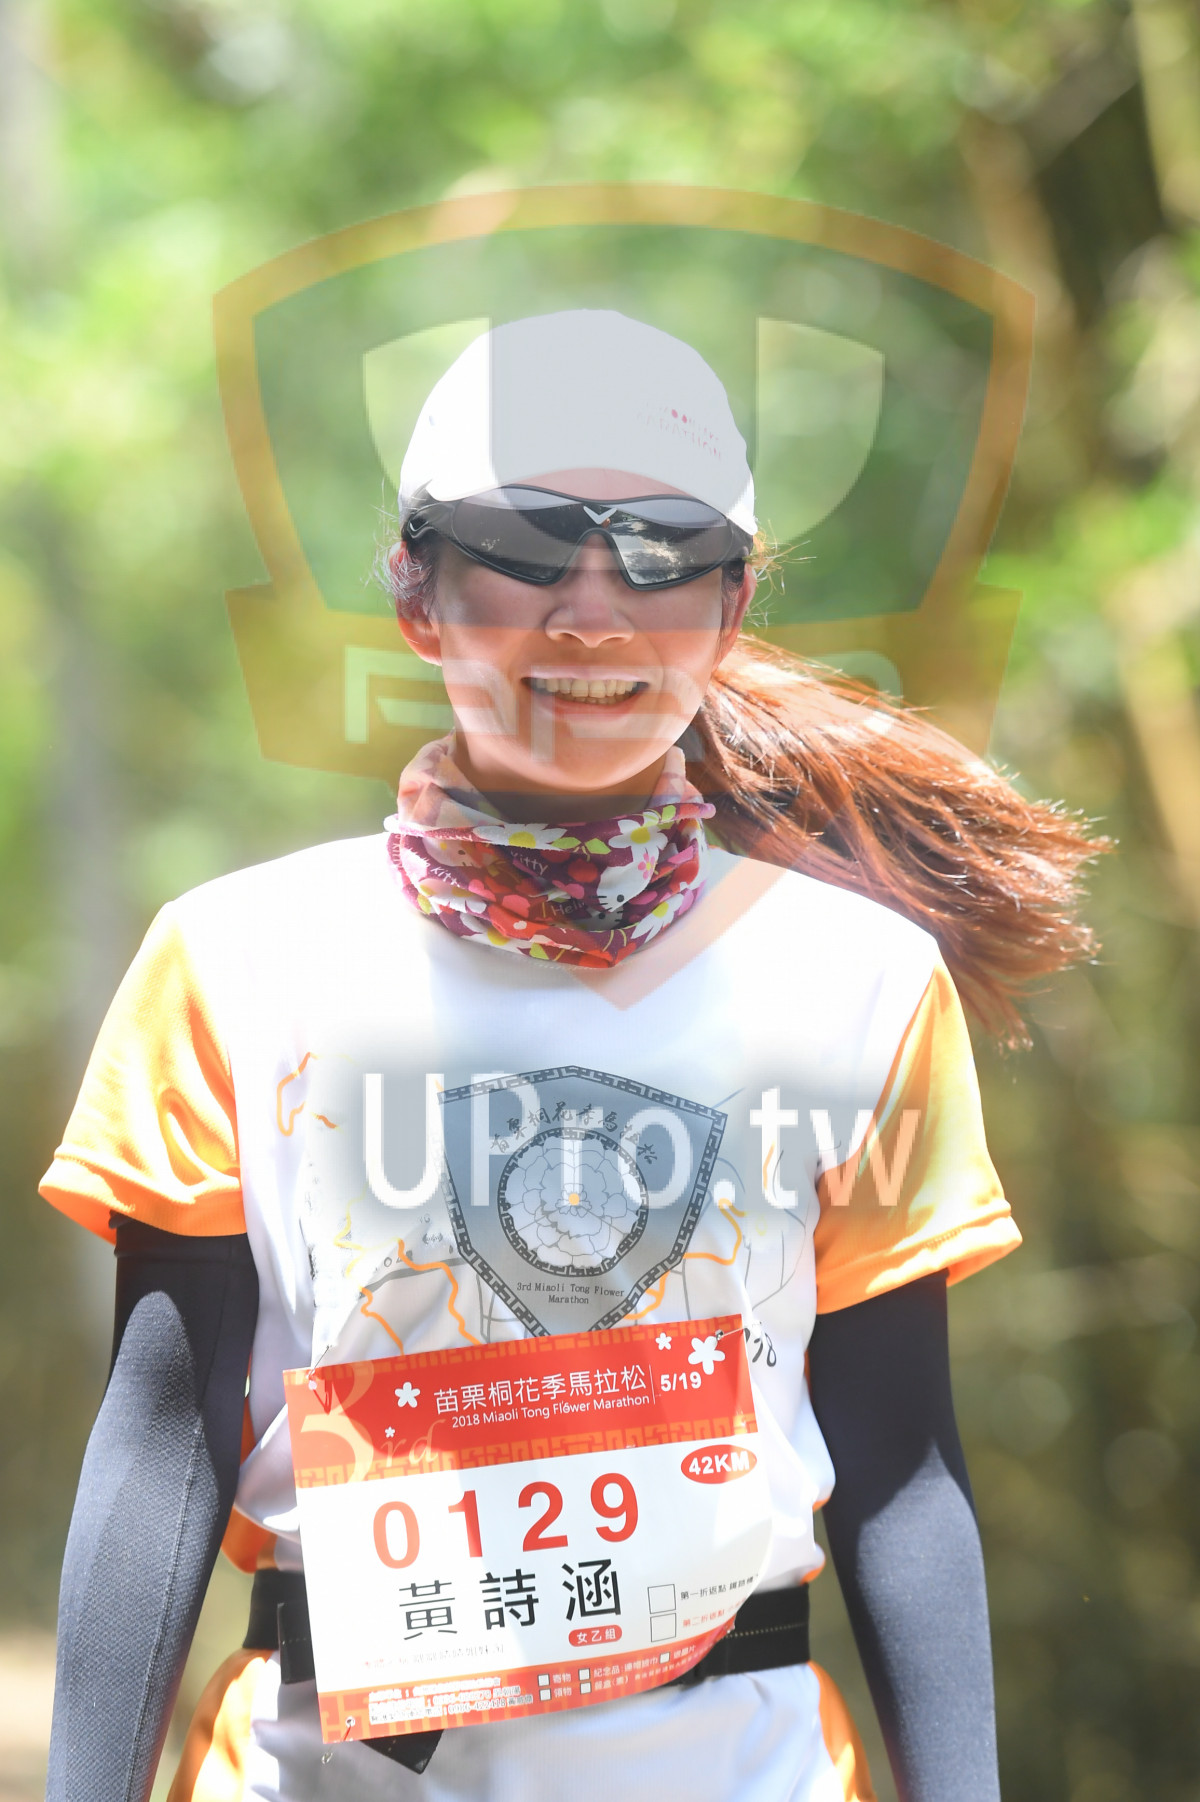 3d Minclt Tong Plcwet,Mara thon,*,5,19,ム!,2018 Miaoli Tong Flöwer Marathon,0129,,42KM,|綠色隧道3|中年人